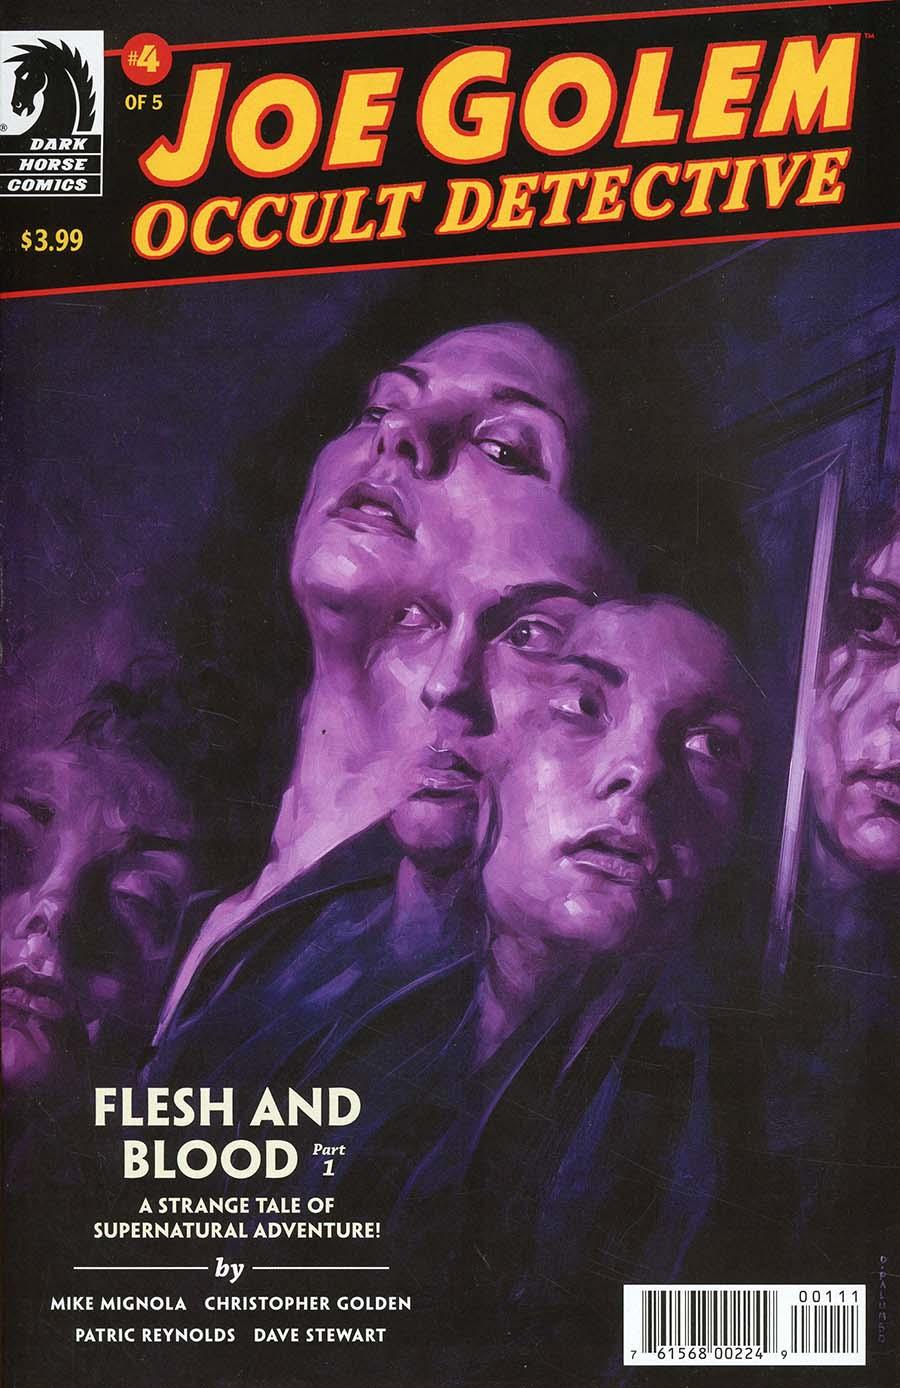 Joe Golem Occult Detective Flesh And Blood Vol. 1 #1